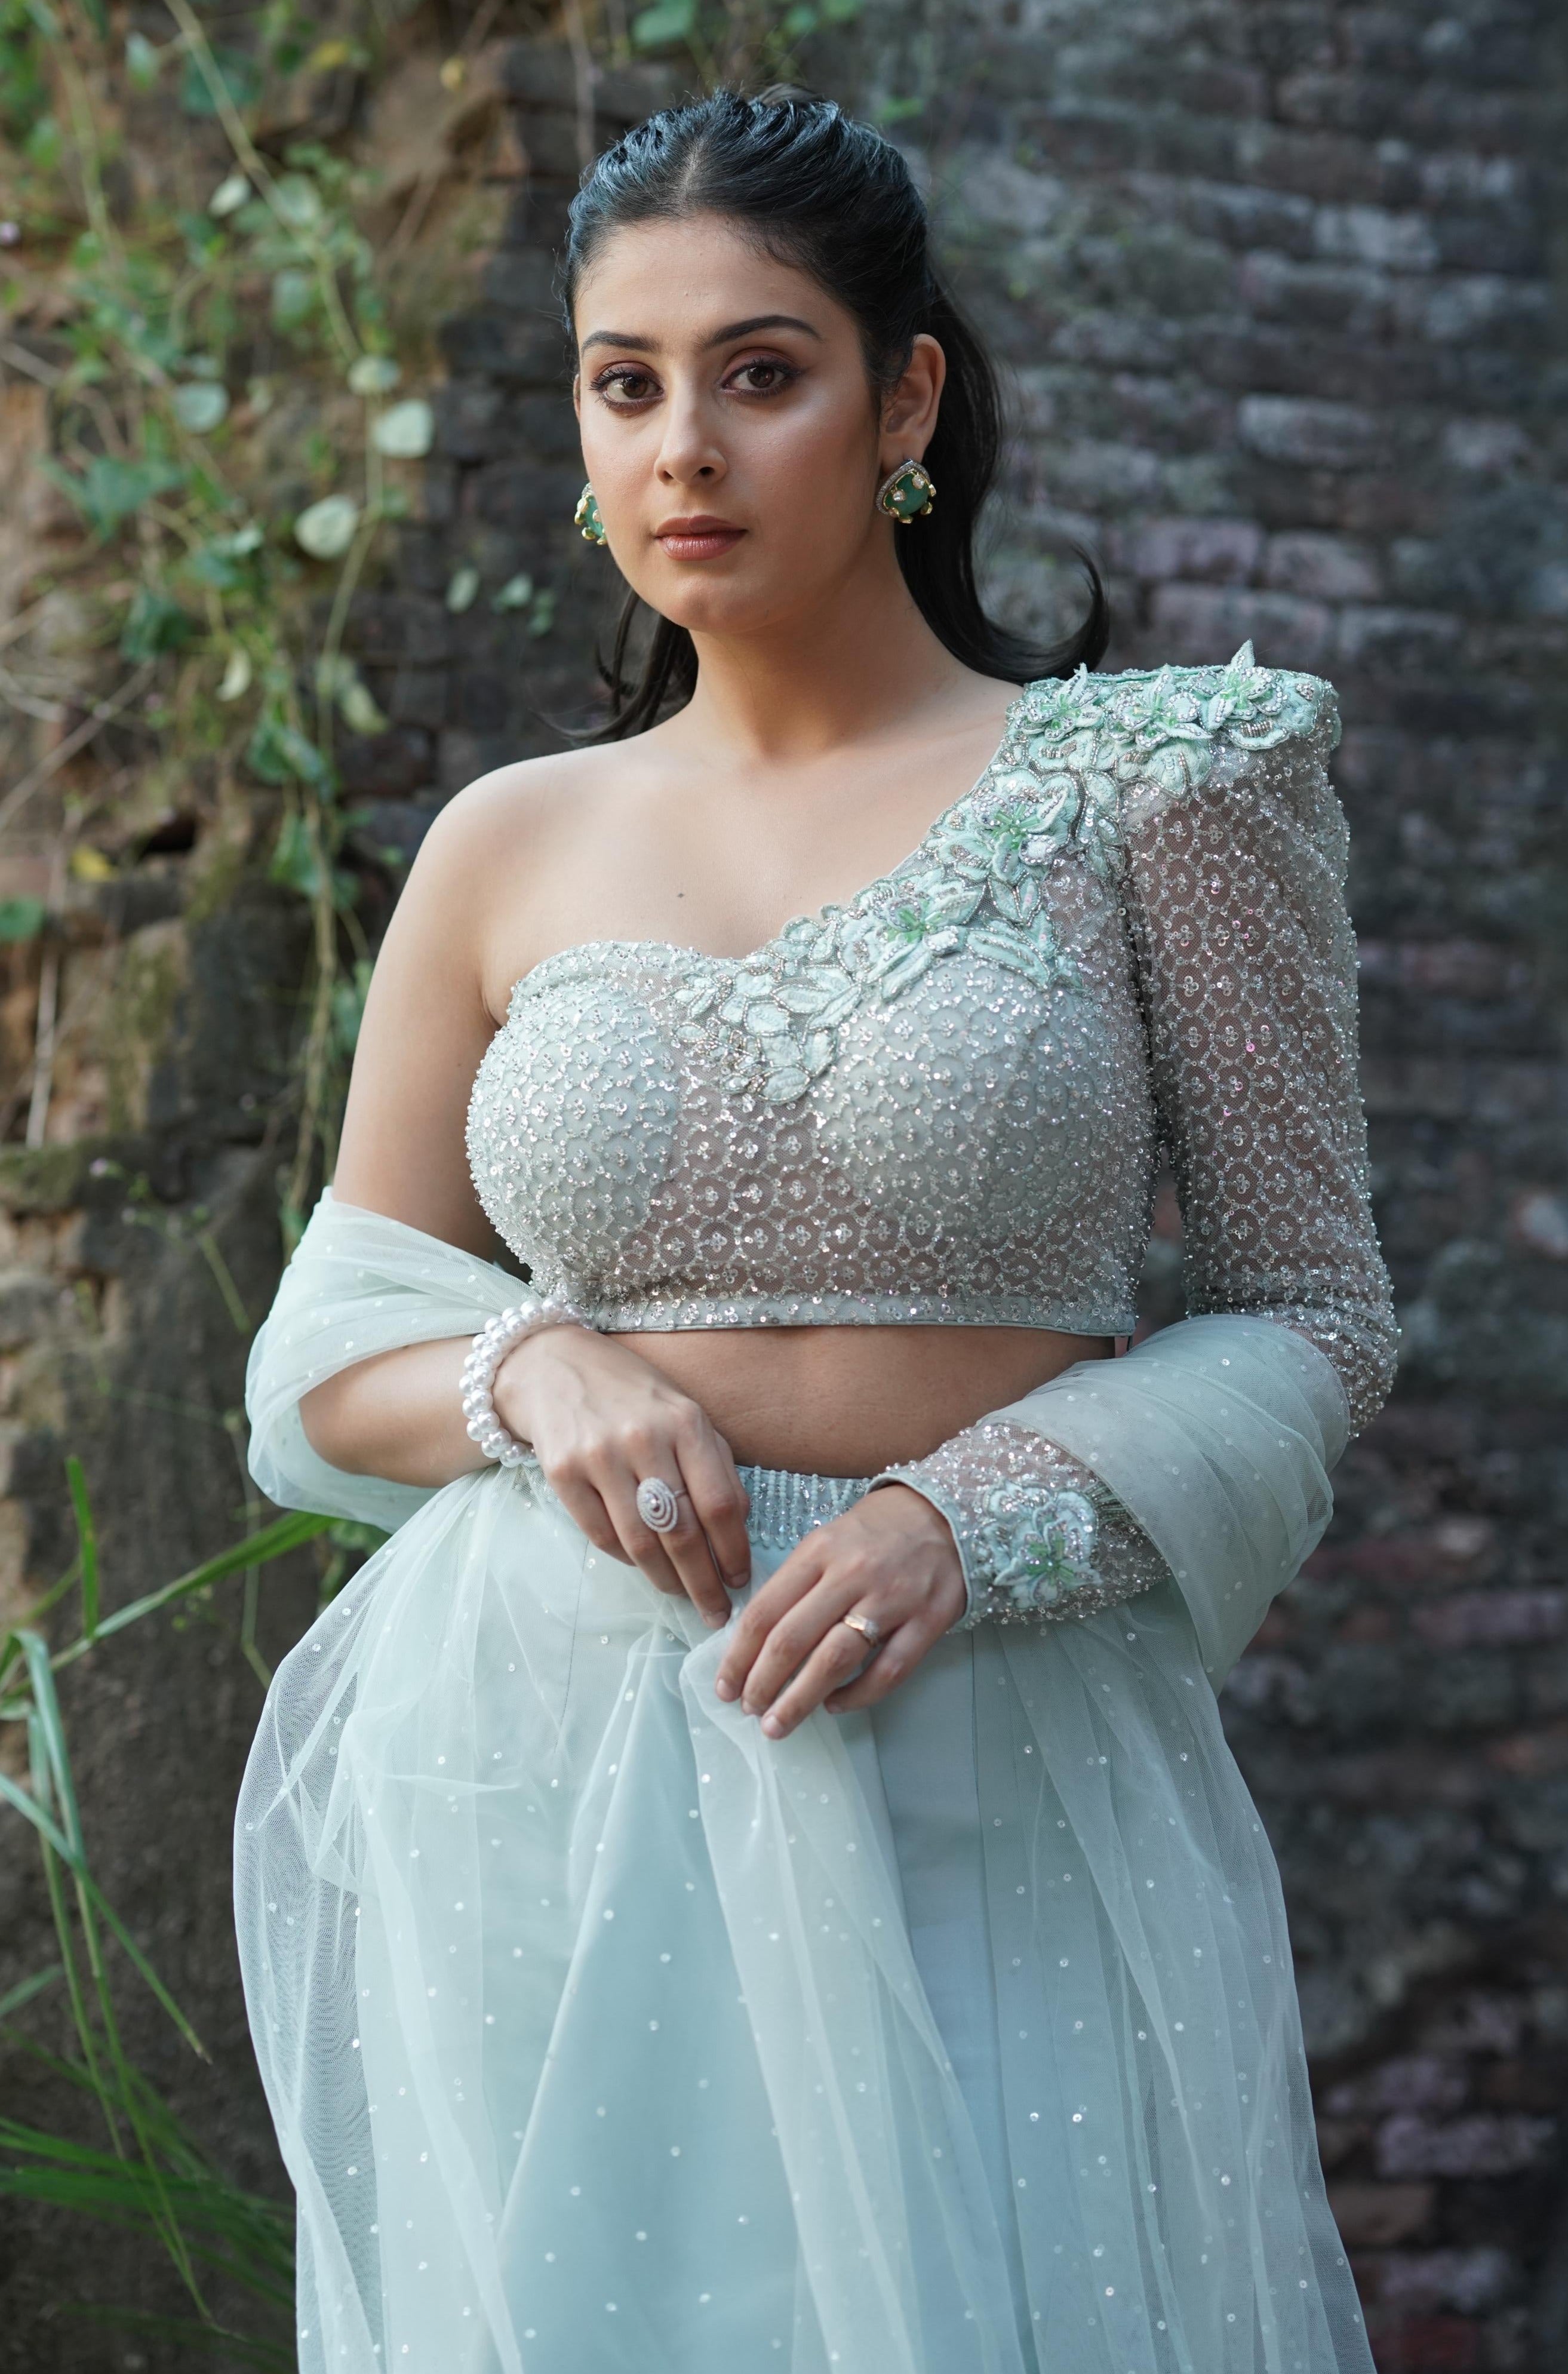 Mermaid Inspired Fusion Wear - Isha Malviya's Choice